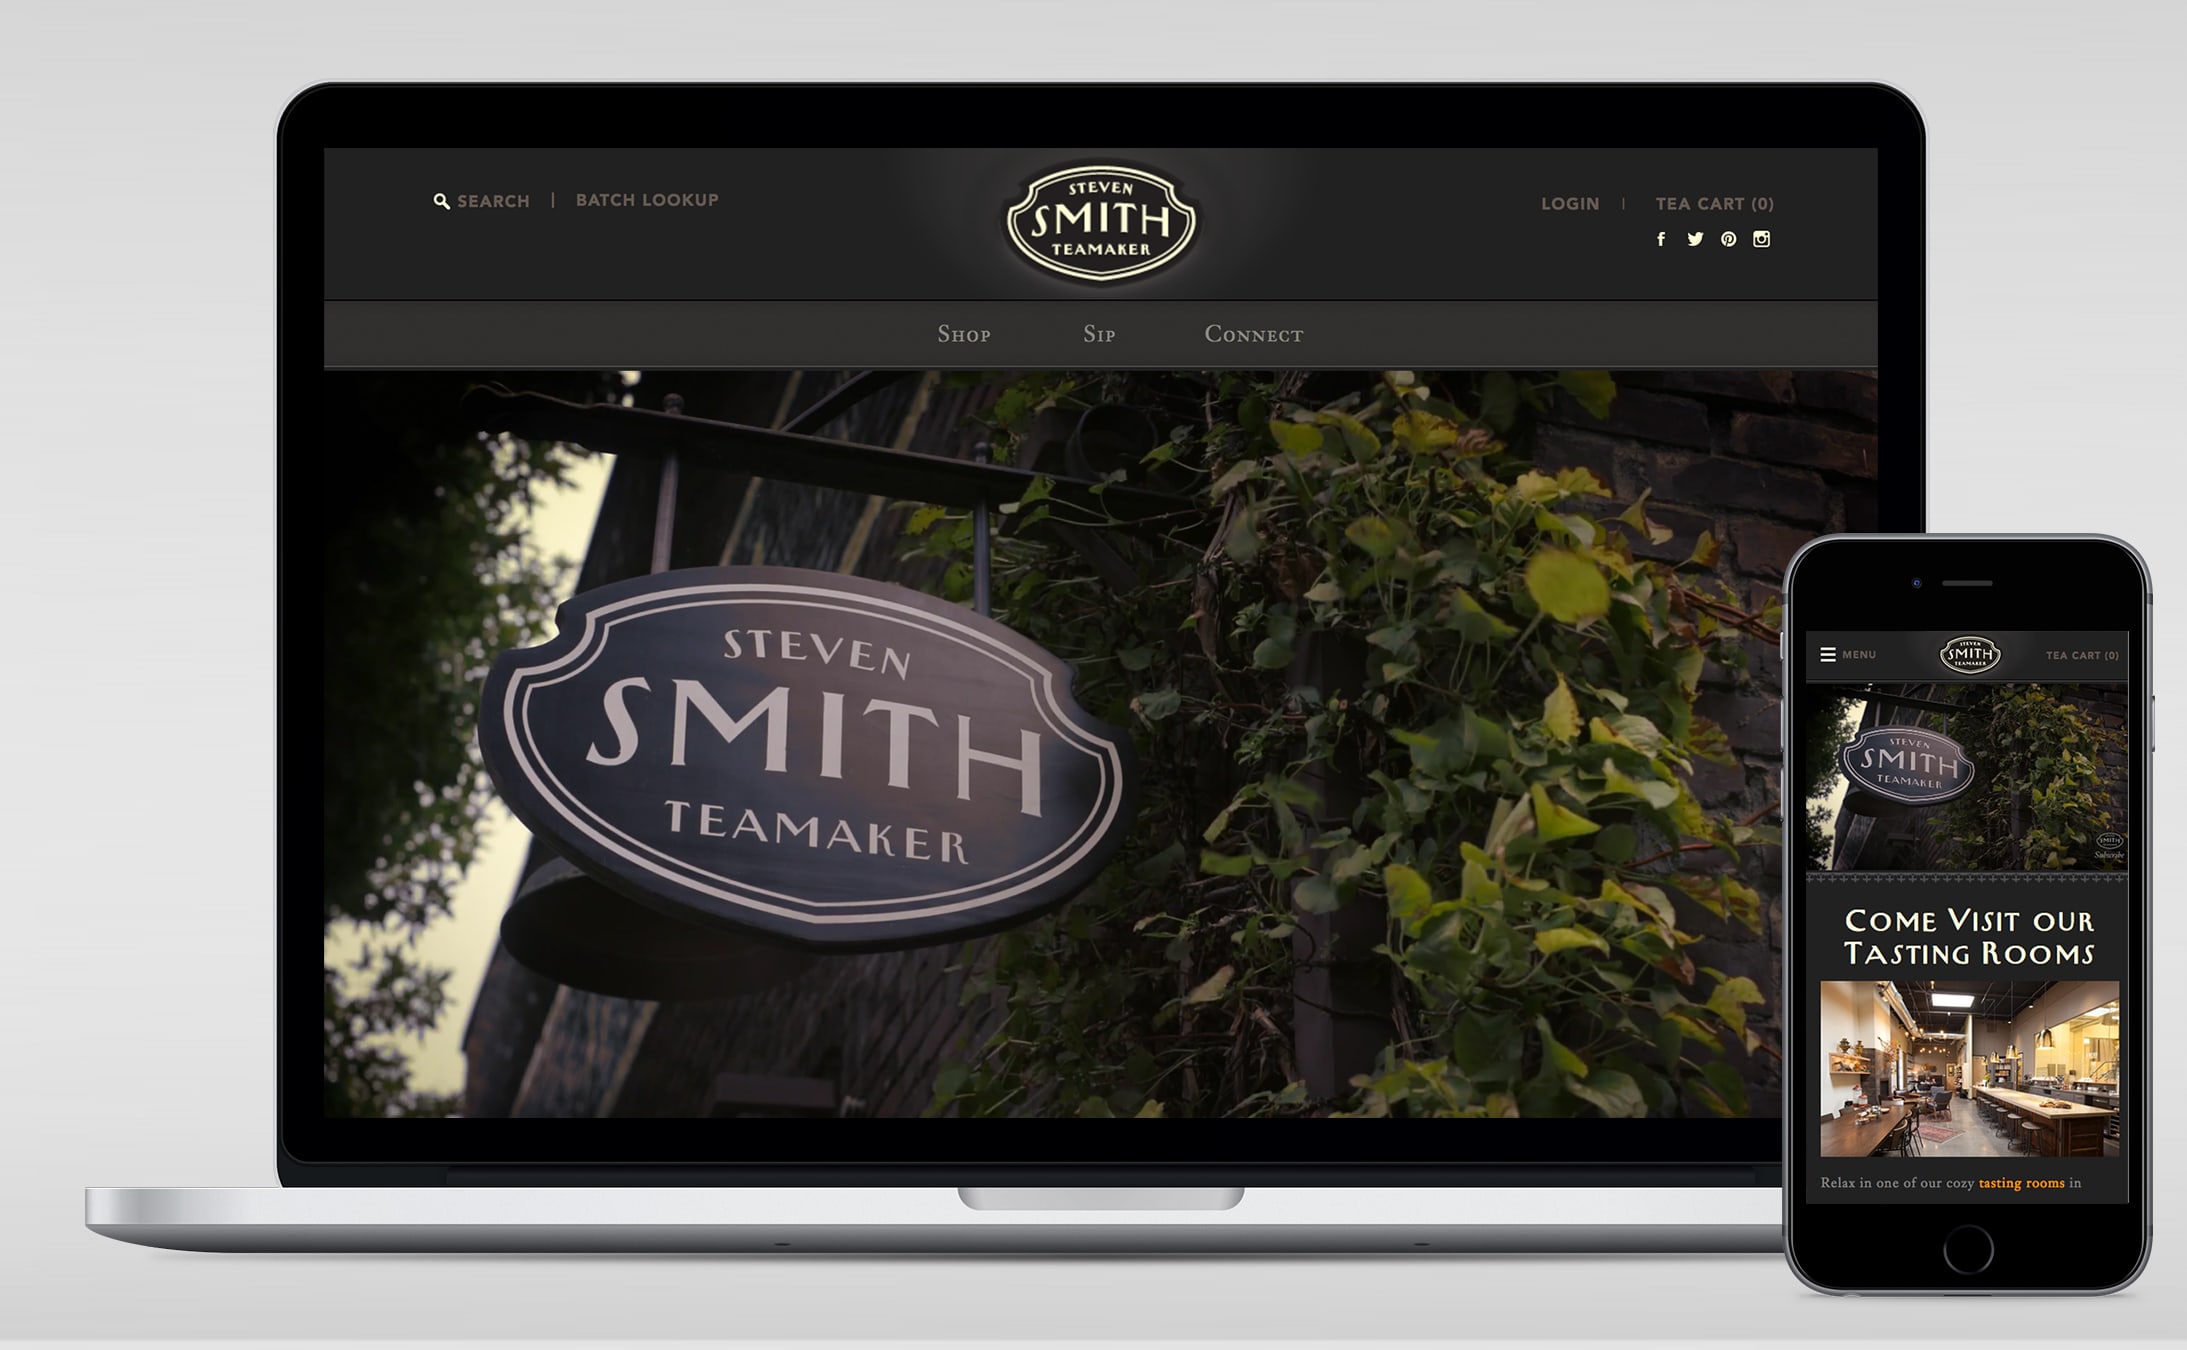 Steven Smith Teamaker website design